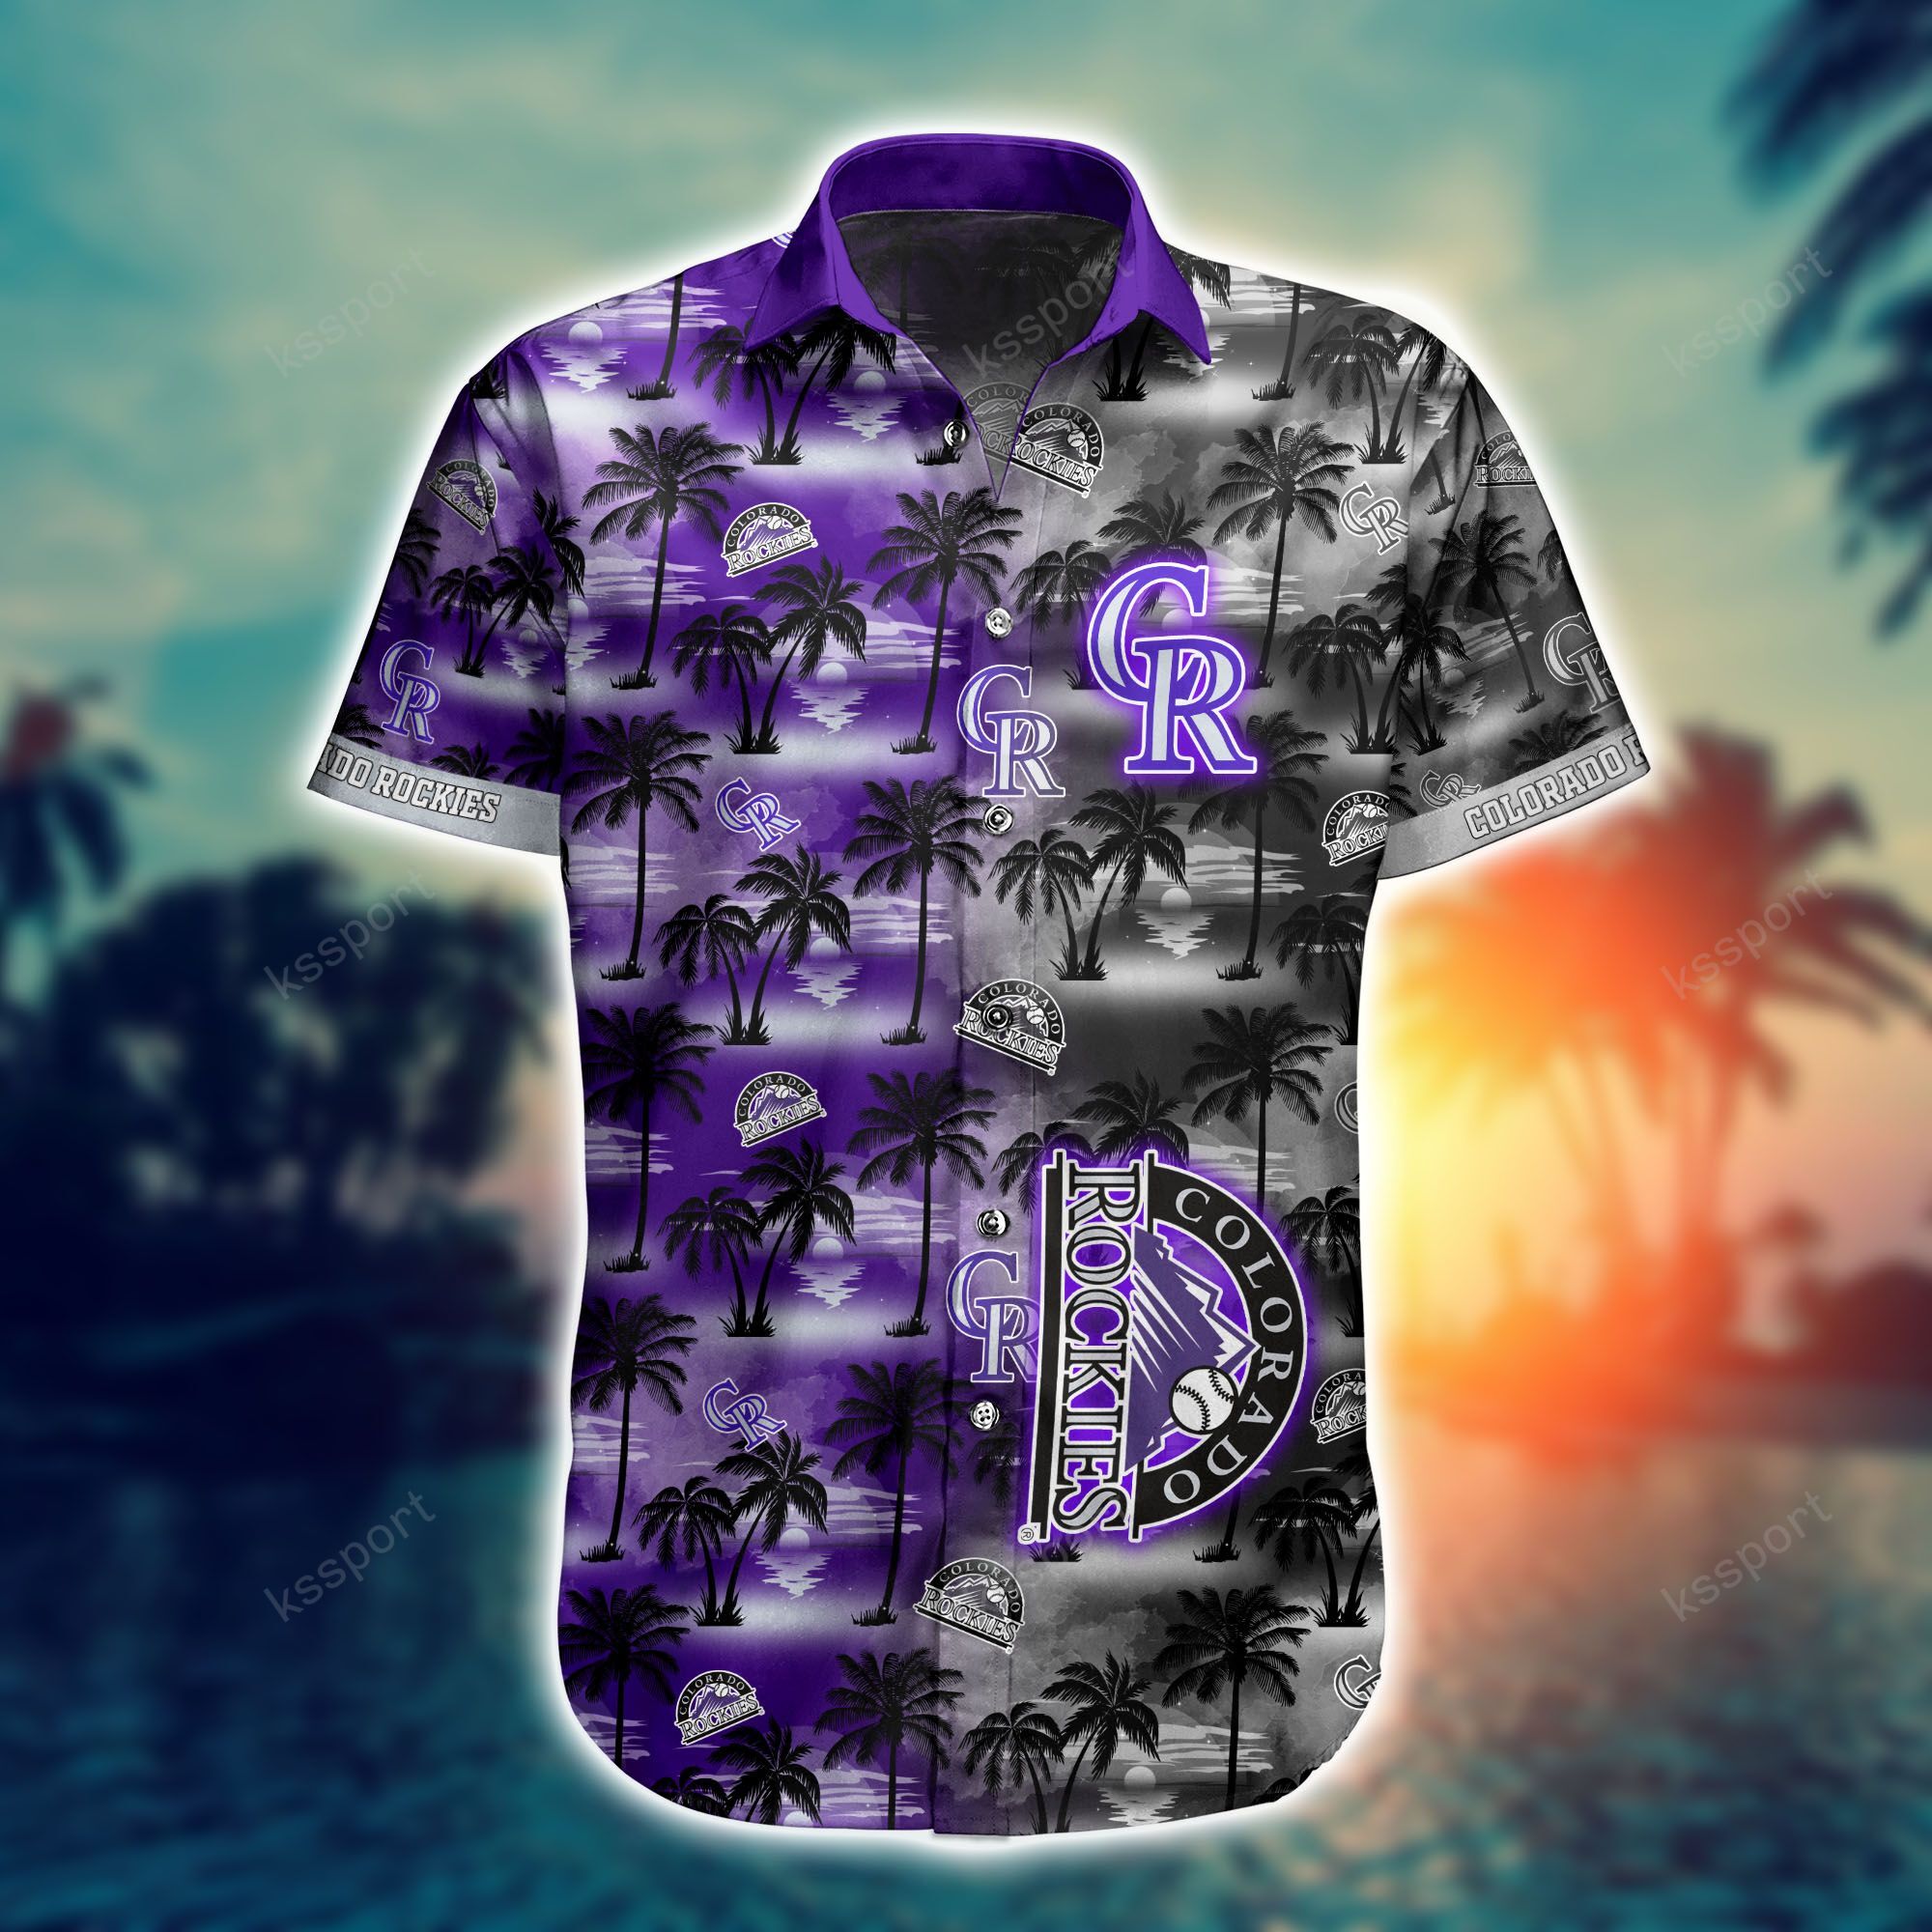 Hawaiian shirt and shorts is a great way to look stylish at a beach party 140